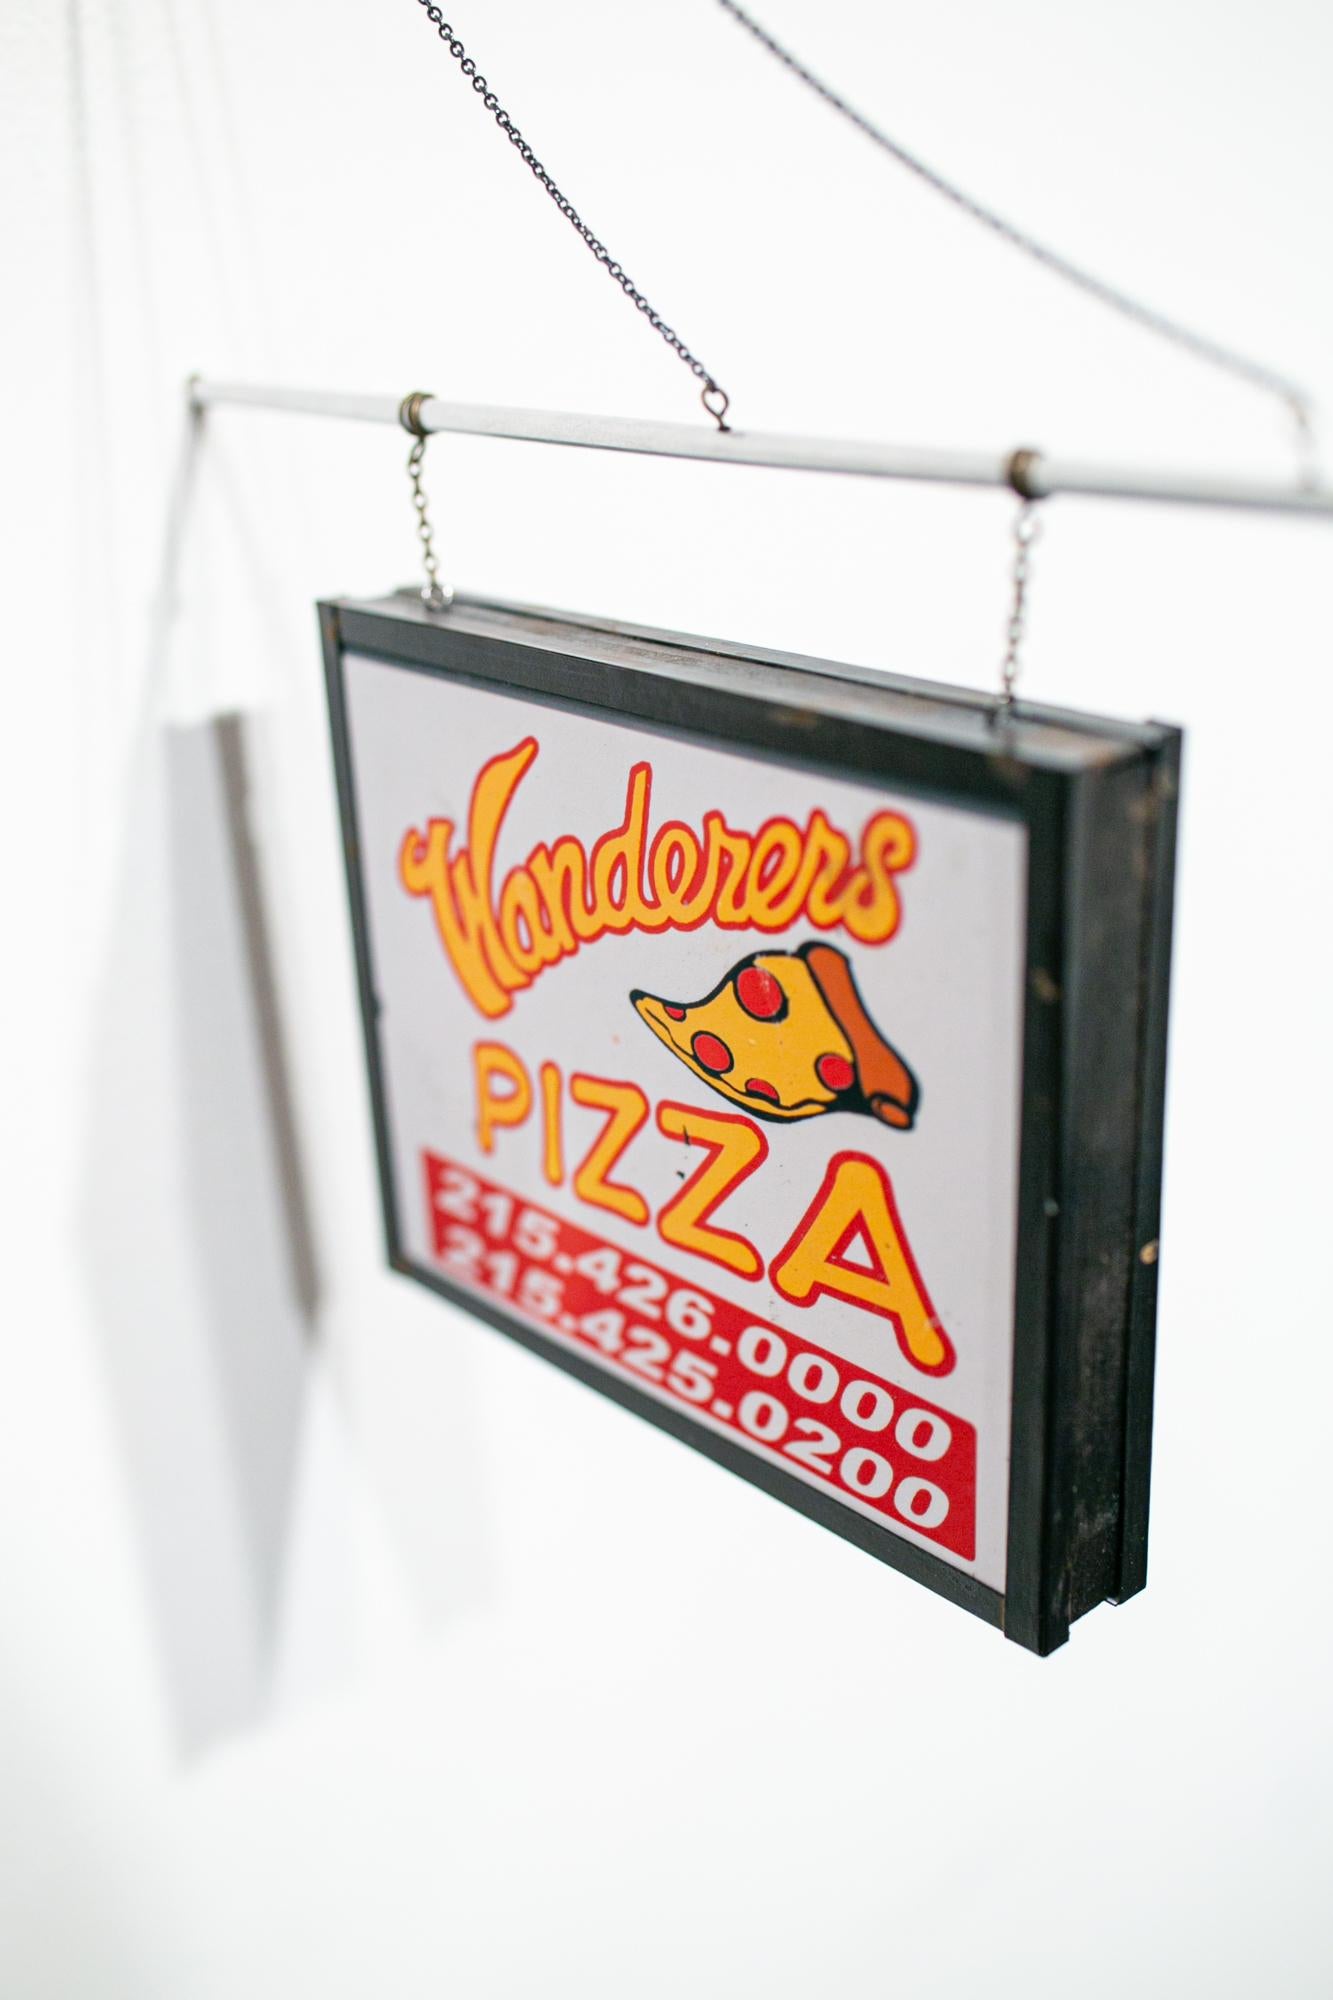 Wanderer's Pizza - Contemporain Art par Drew Leshko